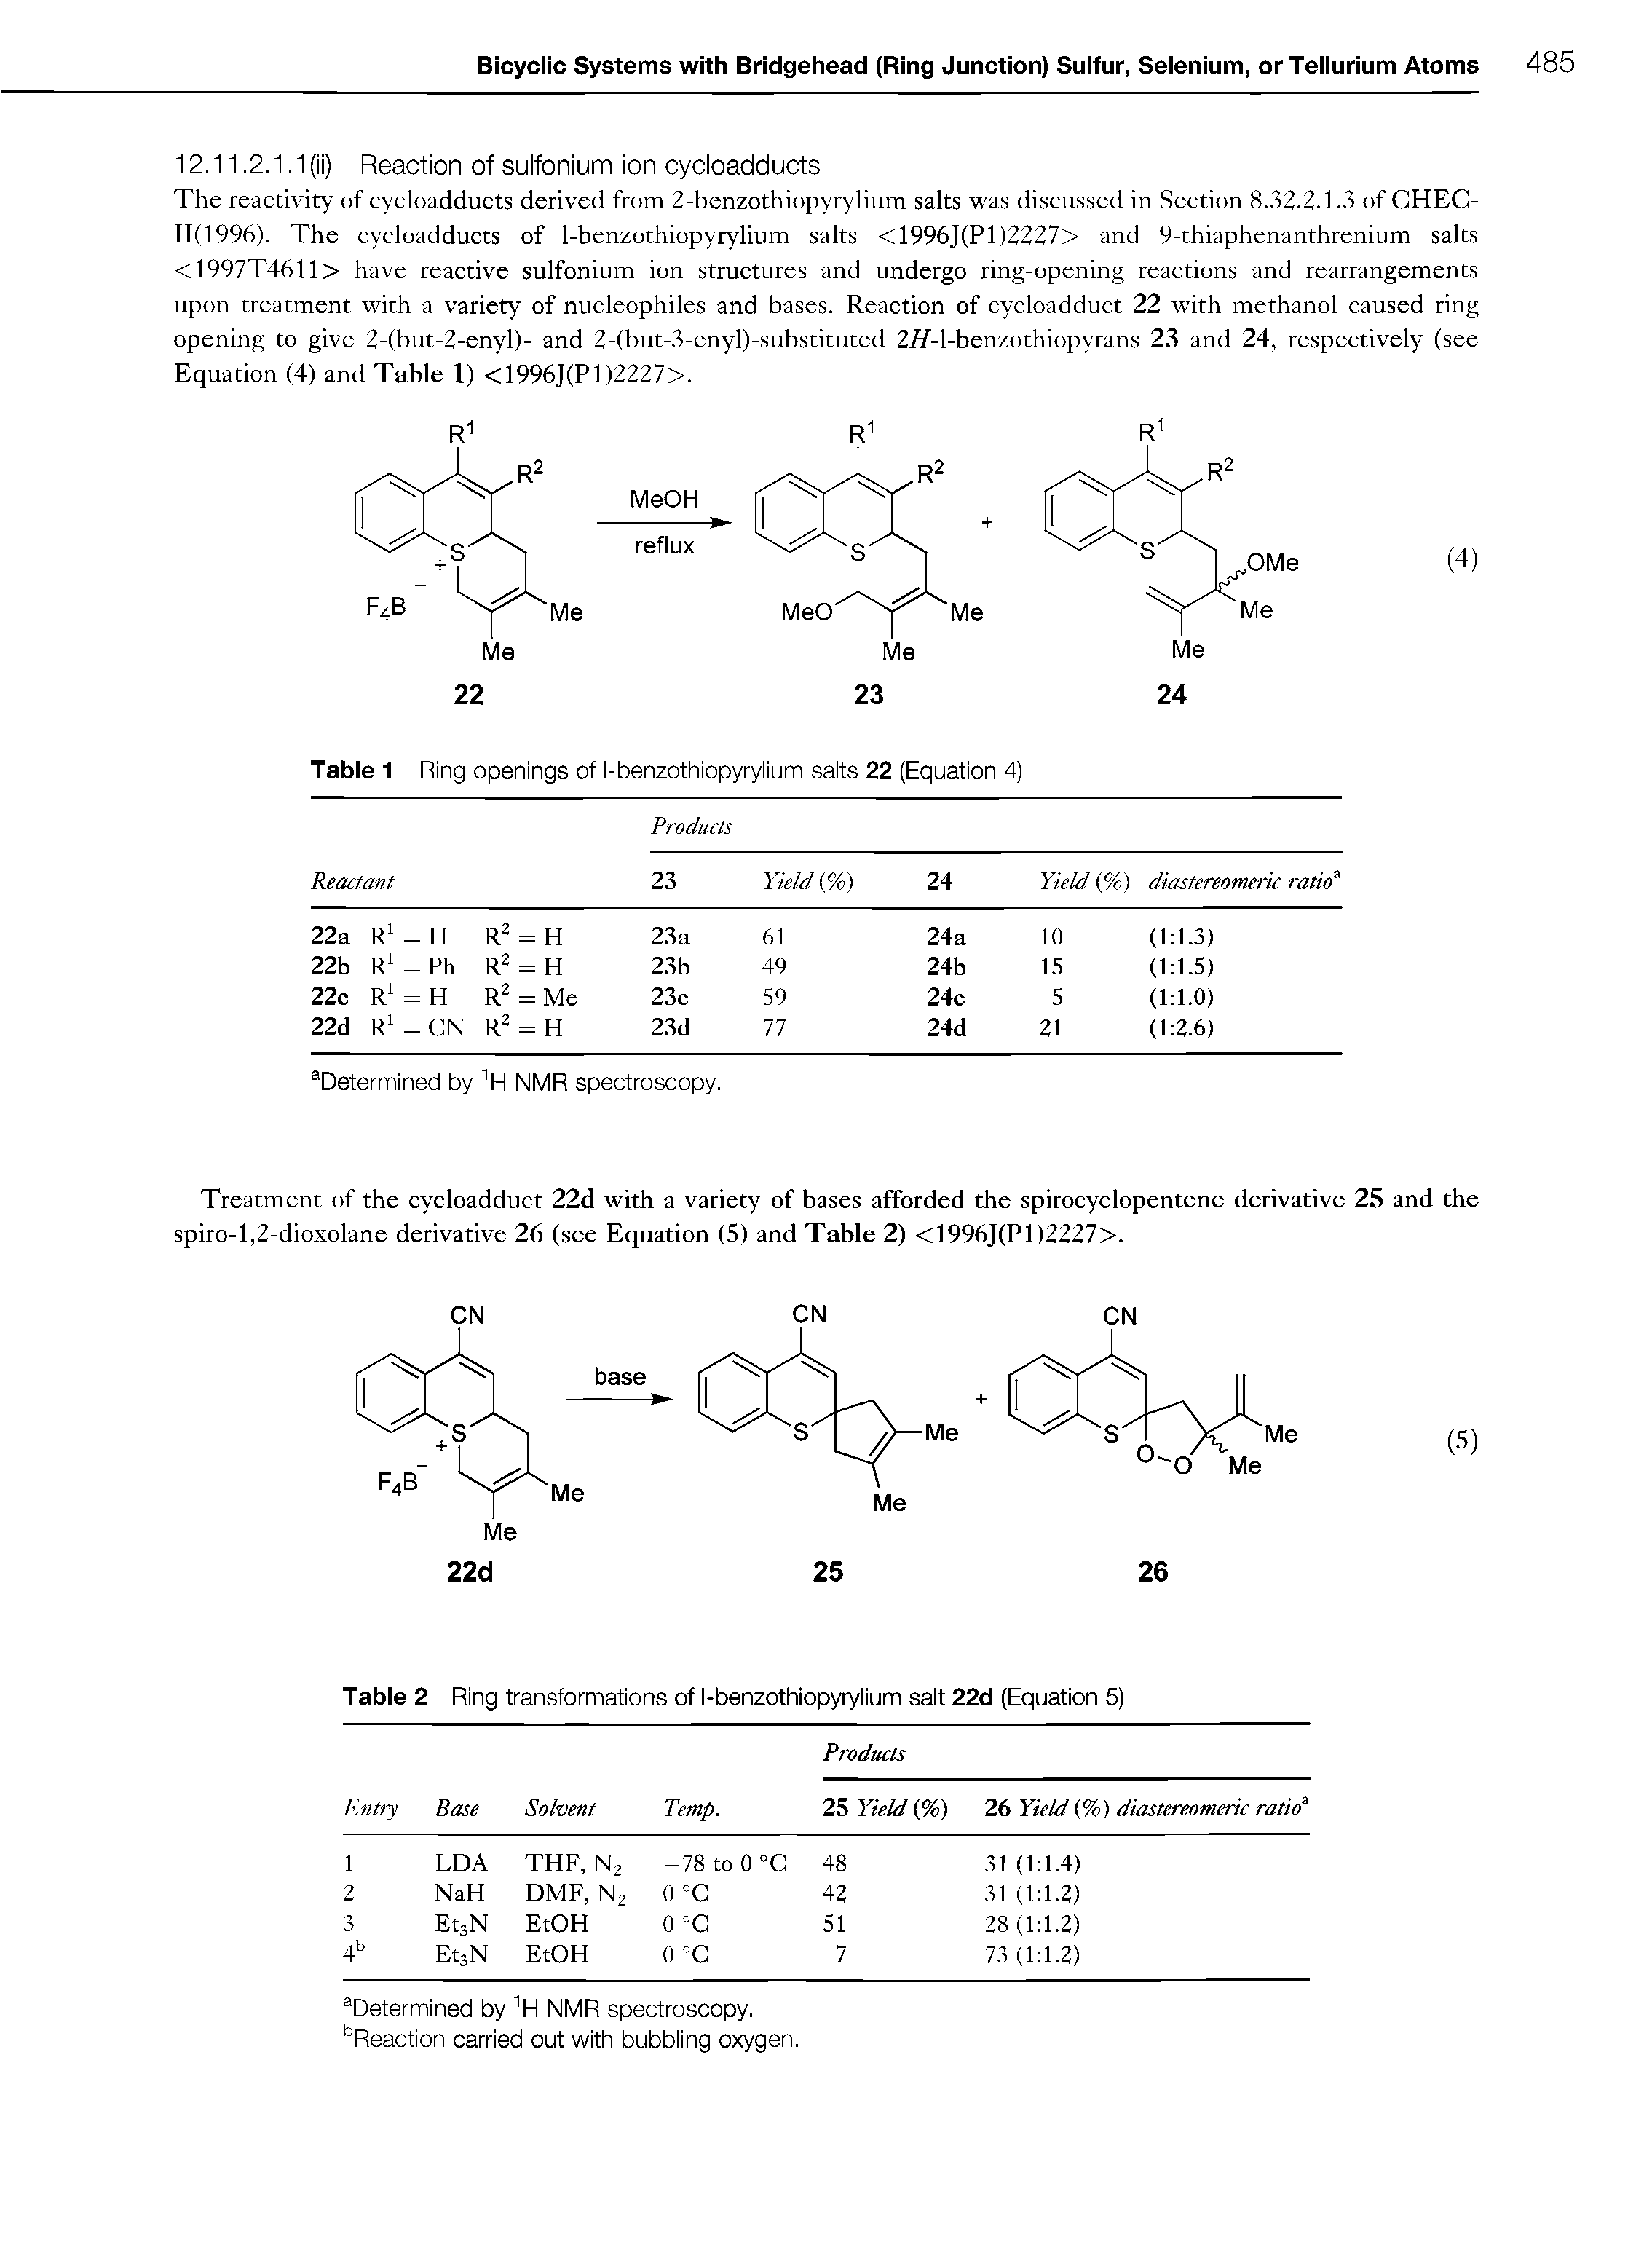 Table 2 Ring transformations of l-benzothiopyrylium salt 22d (Equation 5)...